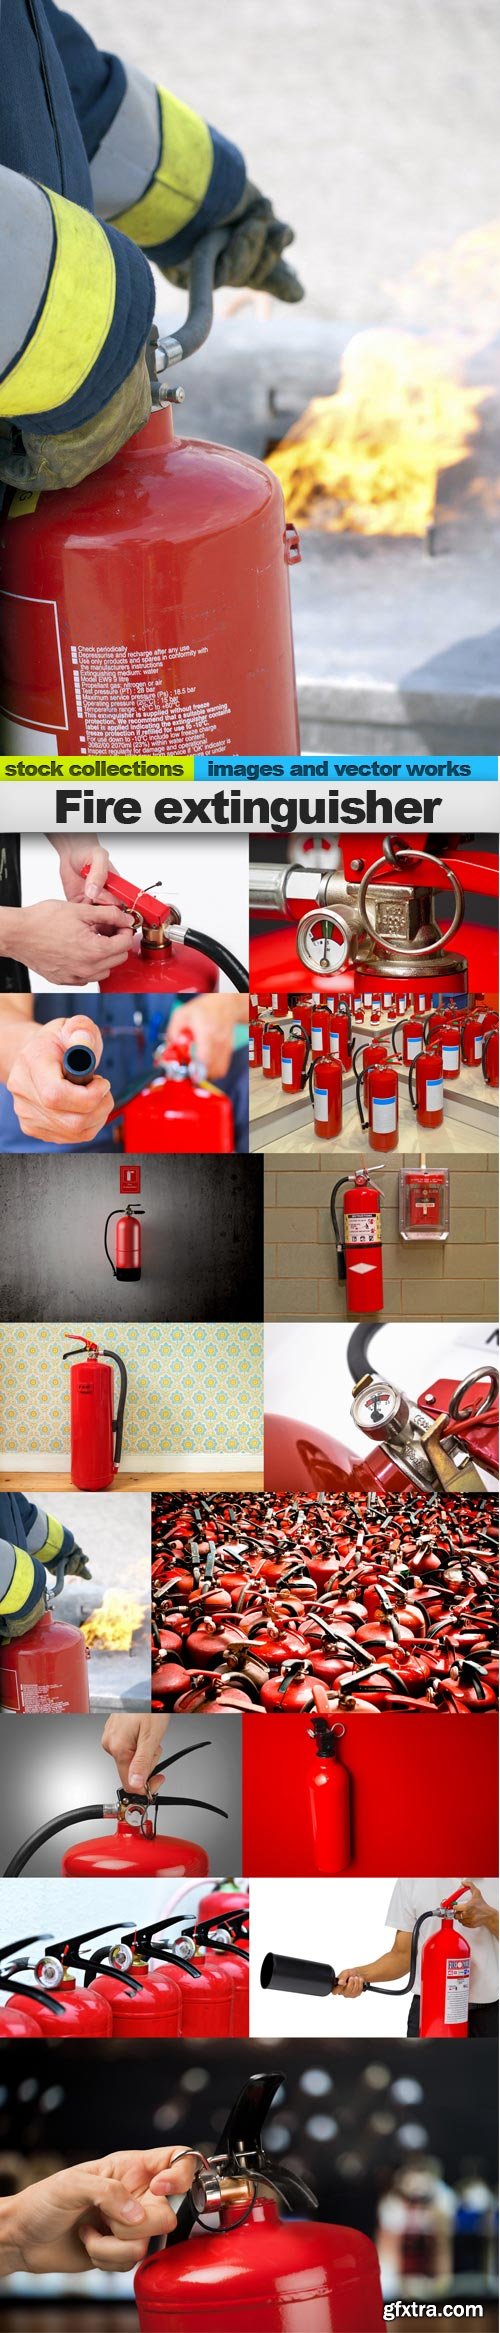 Fire extinguisher, 15 x UHQ JPEG